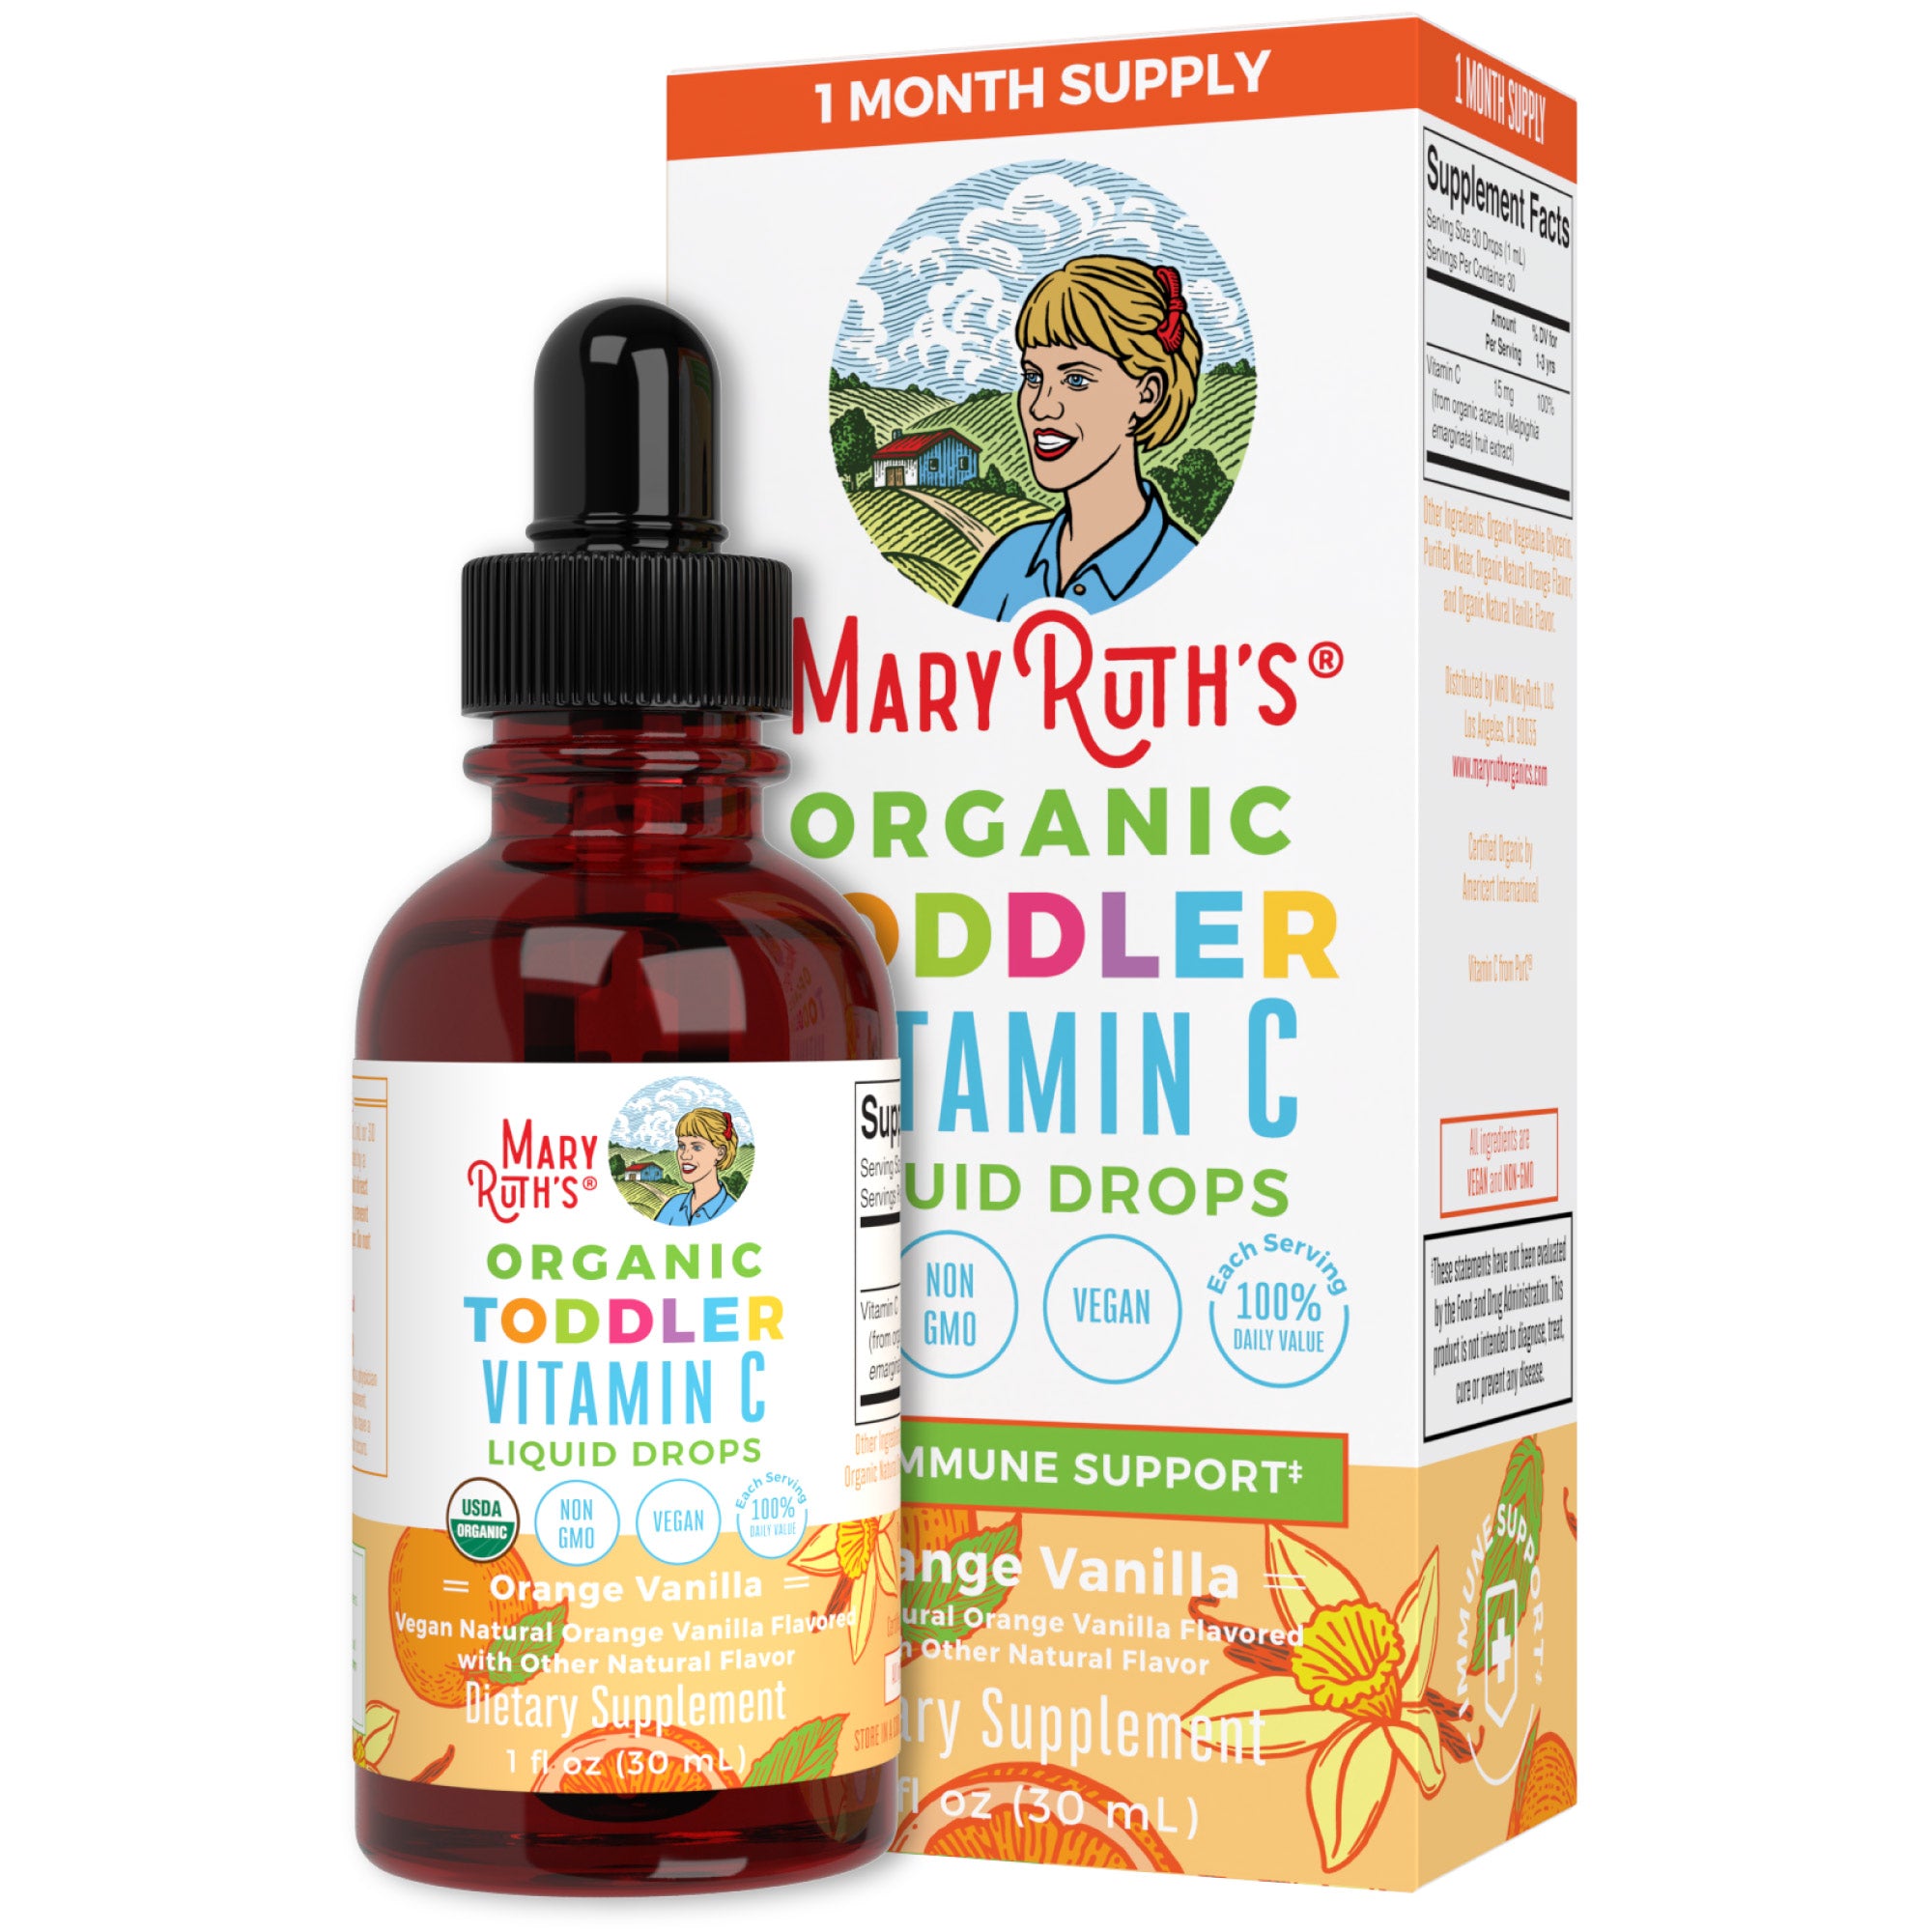 Organic Toddler Vitamin C Liquid Drops